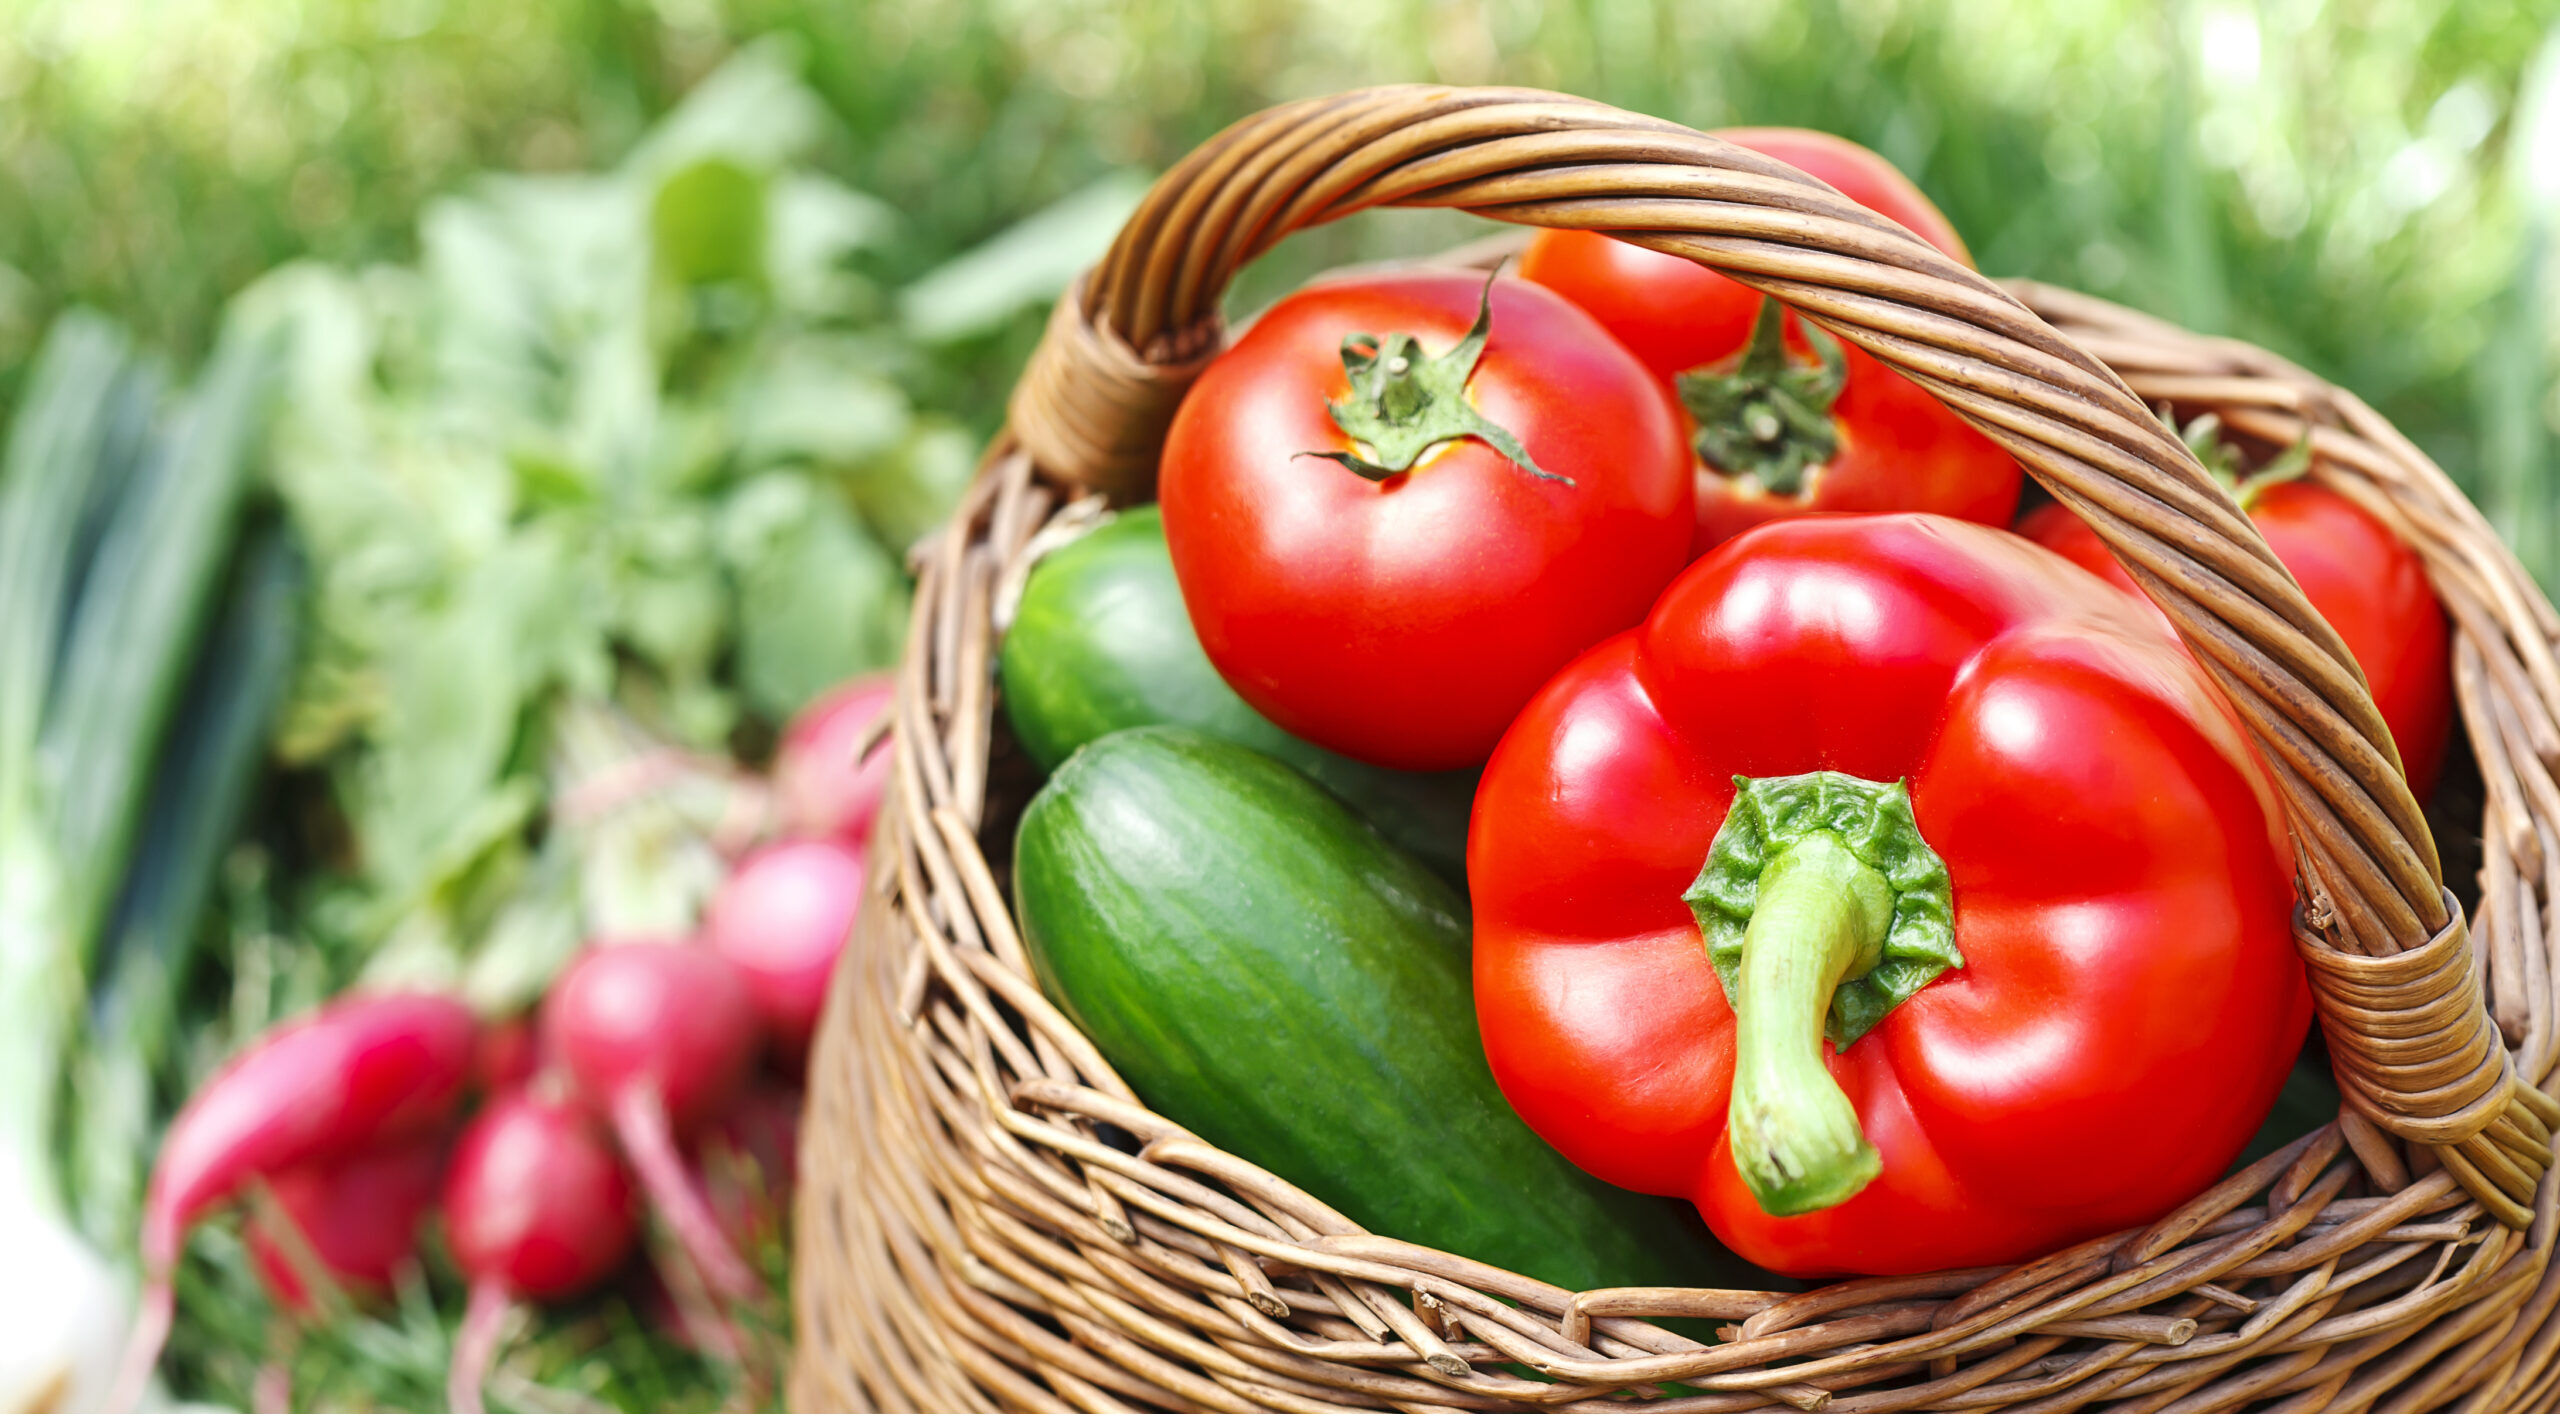 Gemüse, Paprika, gesunde Ernährung, pflanzliche Ernährung, Gemüsekorb, Feldgemüse, Landwirtschaft